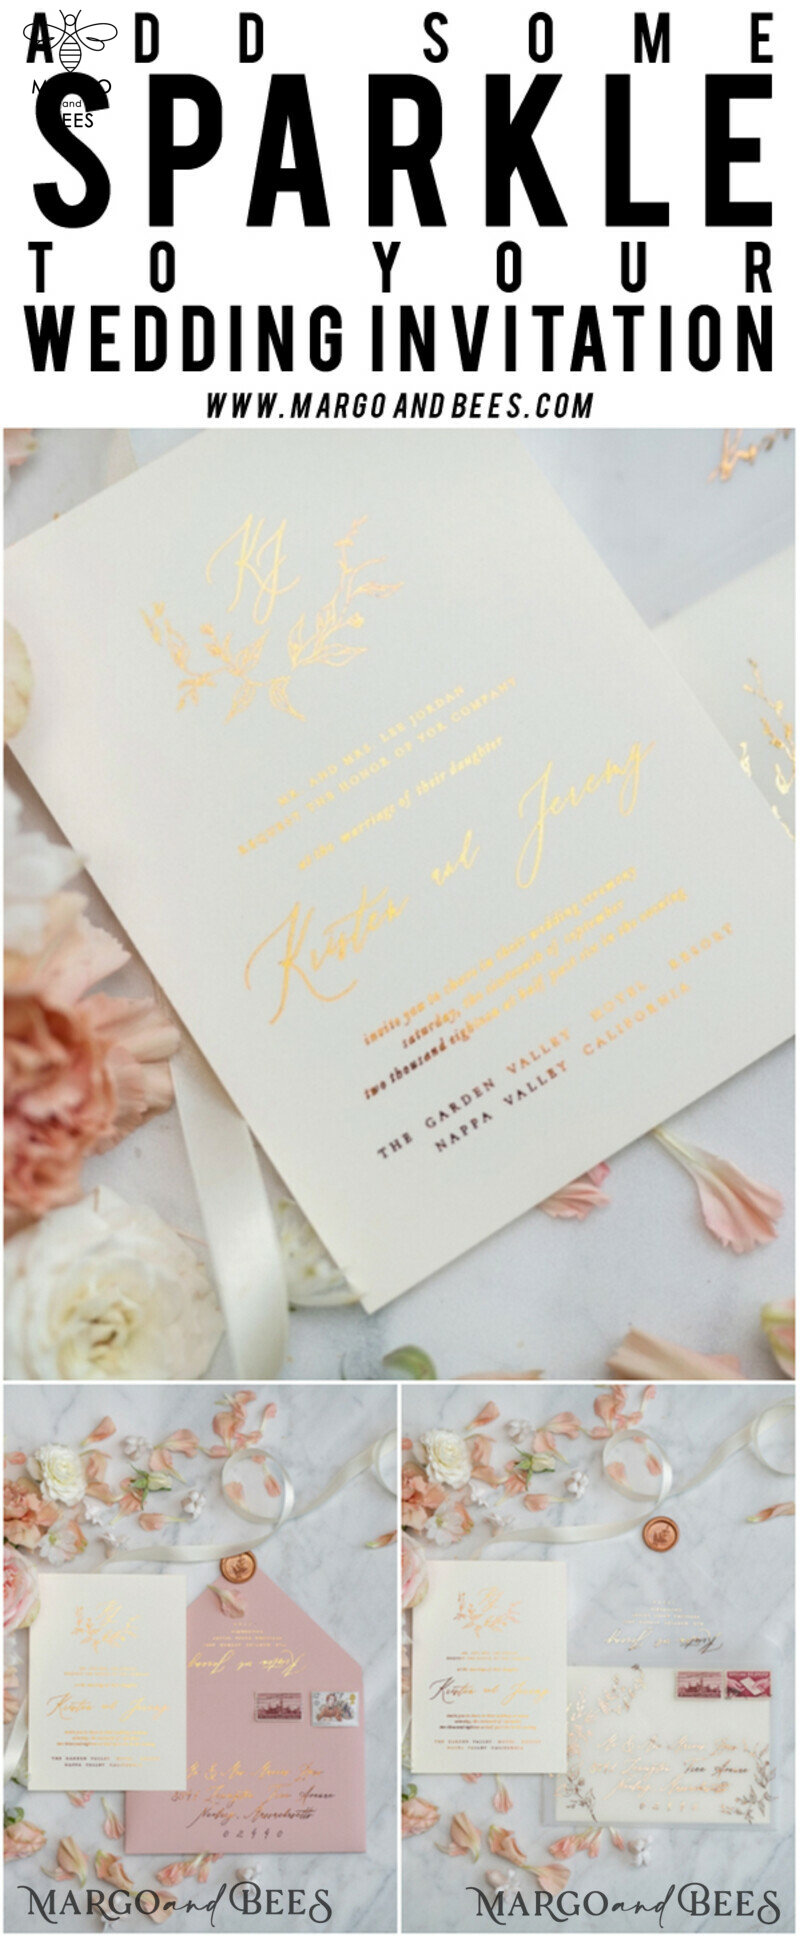 Exquisite Blush Pink and Gold Foil Wedding Invitations: A Unique Vellum Suite for an Elegant Celebration-41